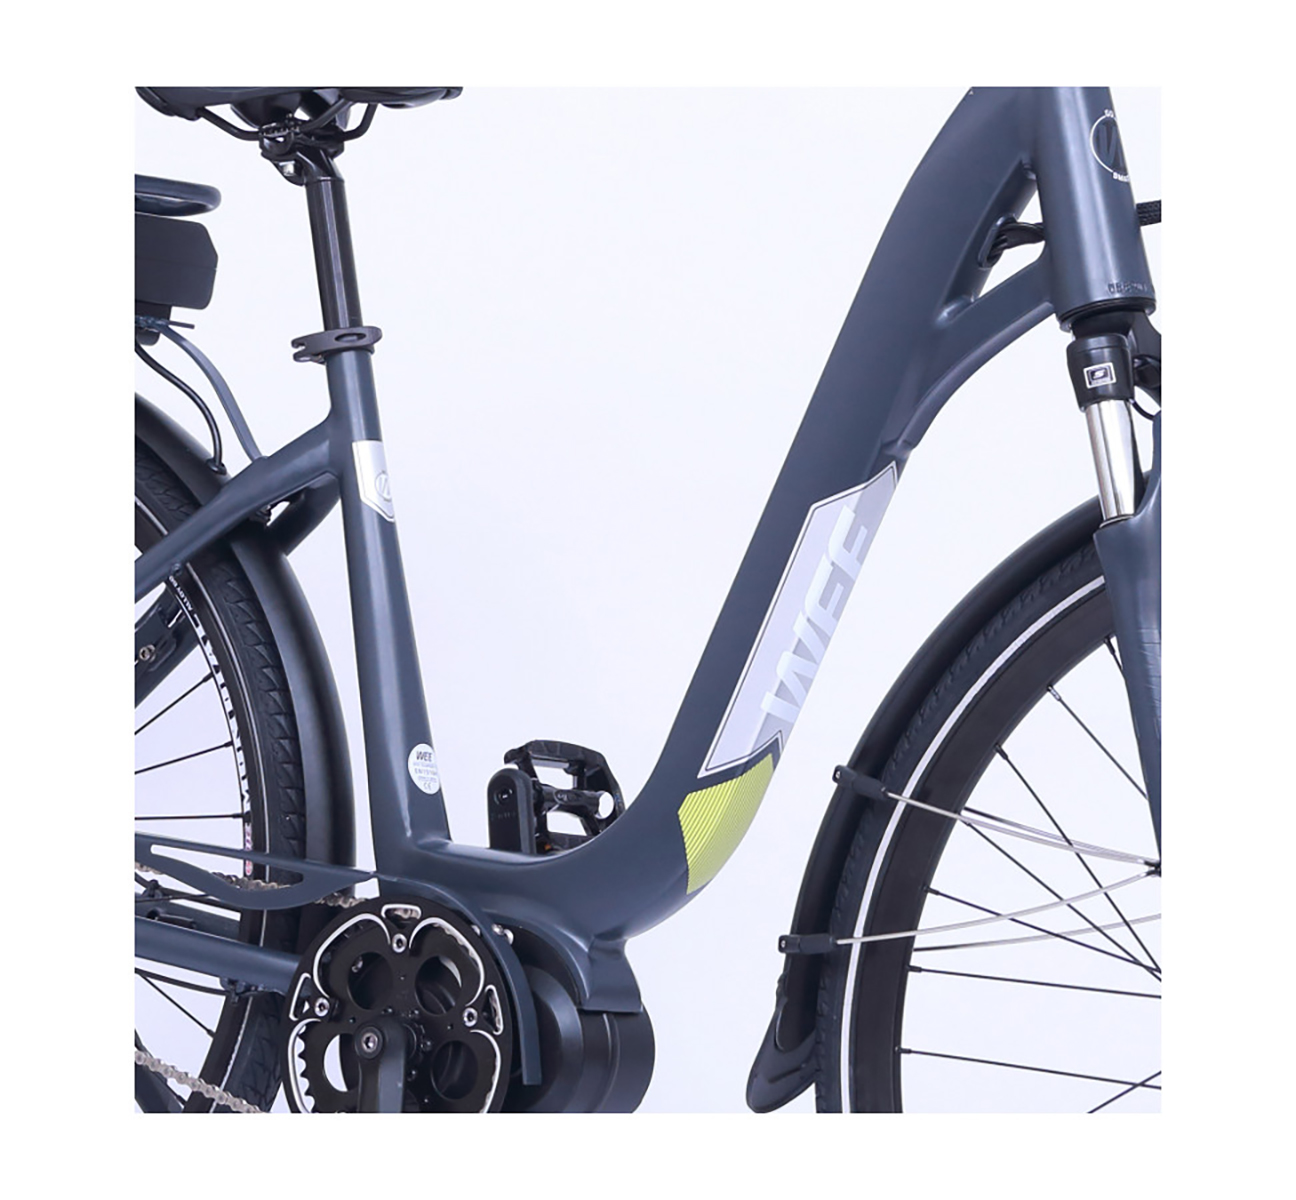 LINGDA 250W elektrische Fahrrad-LED-Beleuchtung Citybike blau) Unisex-Rad, (Laufradgröße: Zoll, 28